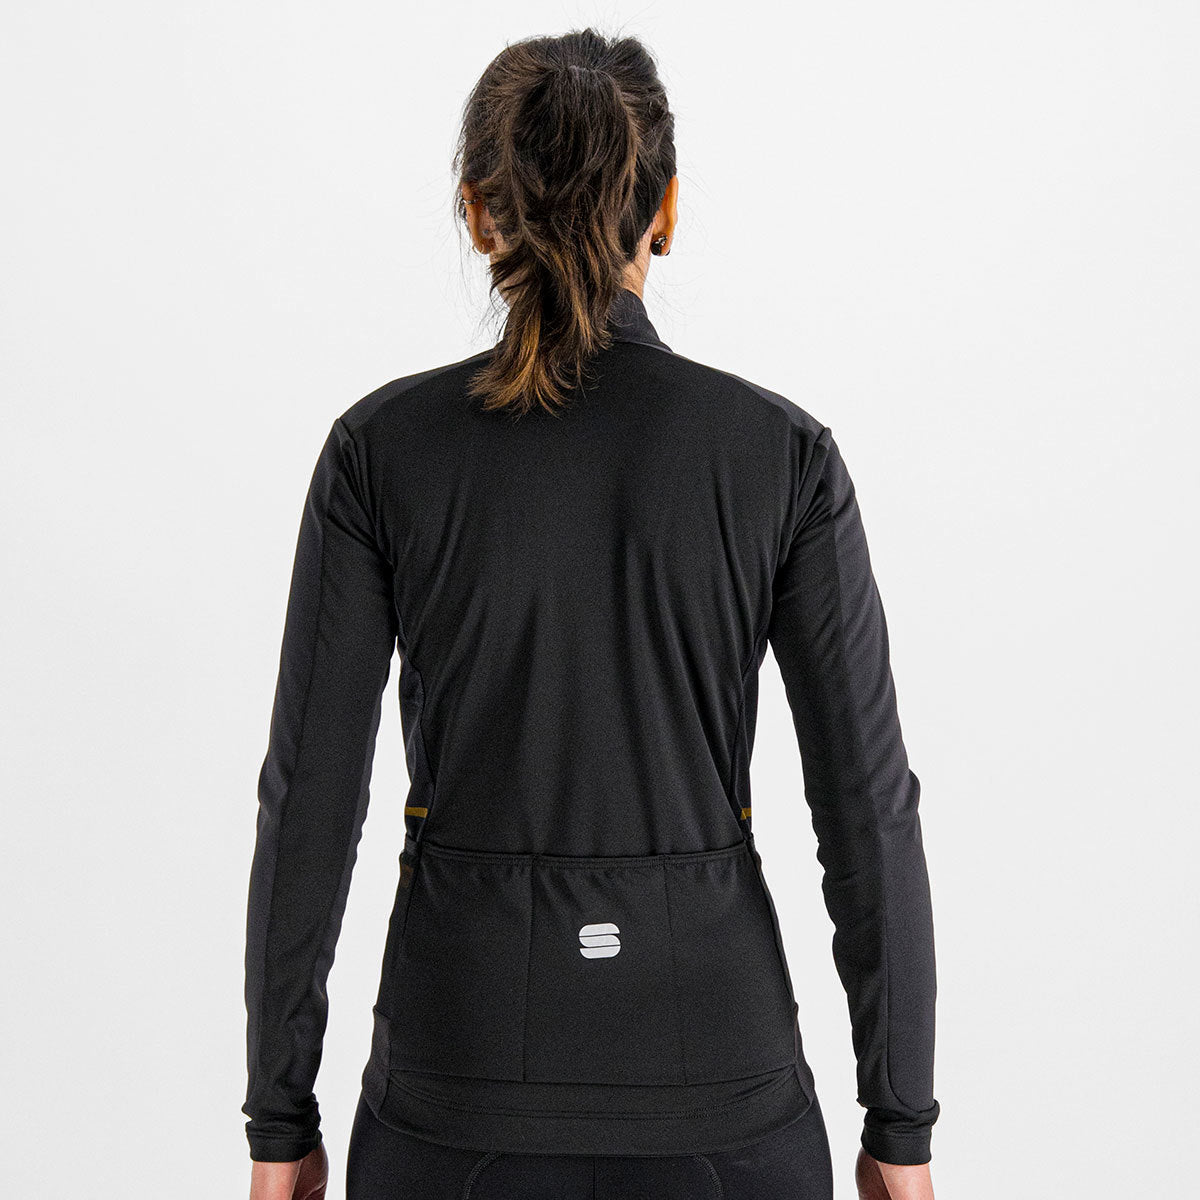 Sportful - Women's Neo Softshell Jacket - Fietsjack maat M, zwart/grijs